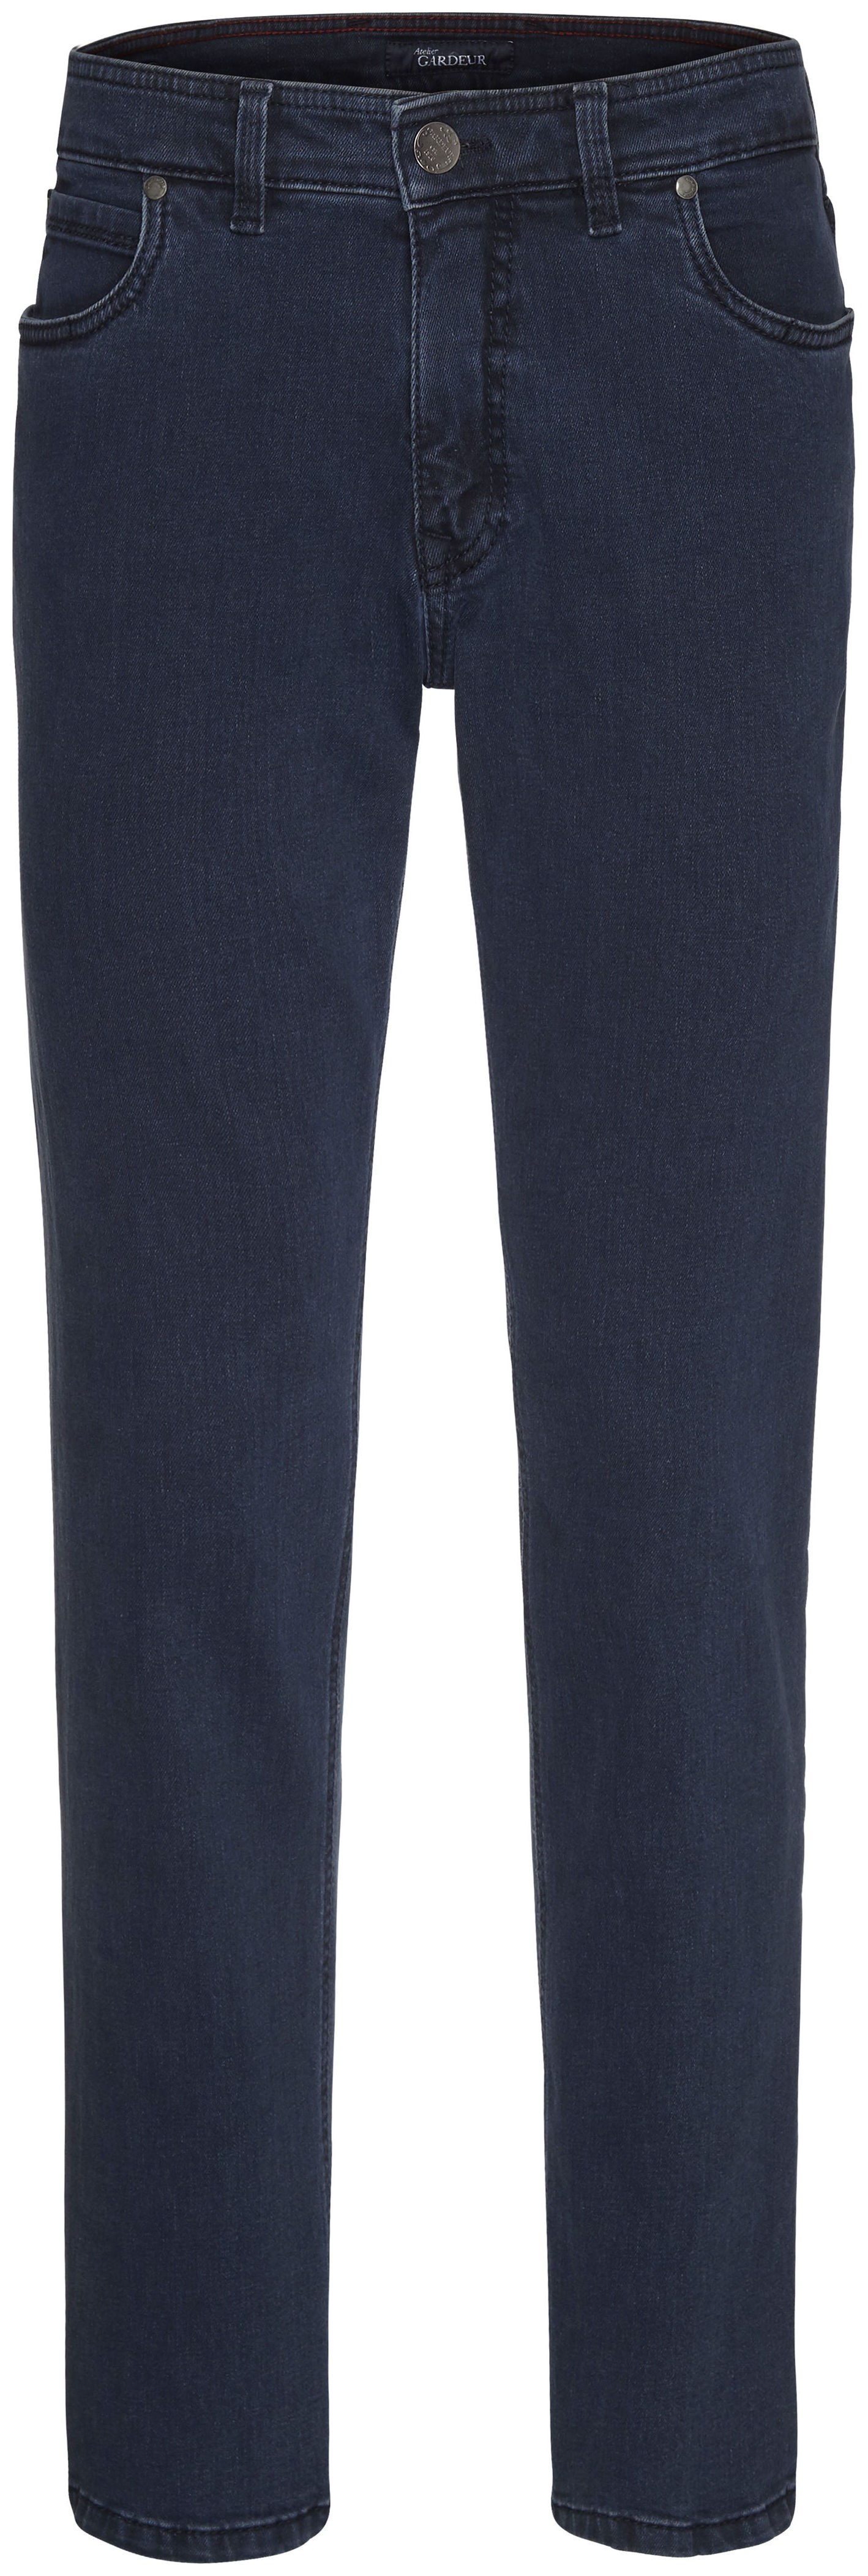 Activeren Middellandse Zee alleen Gardeur BATU-2 Modern-Fit 5-Pocket Jeans in kleur Blauw | Jan Rozing  Mannenmode